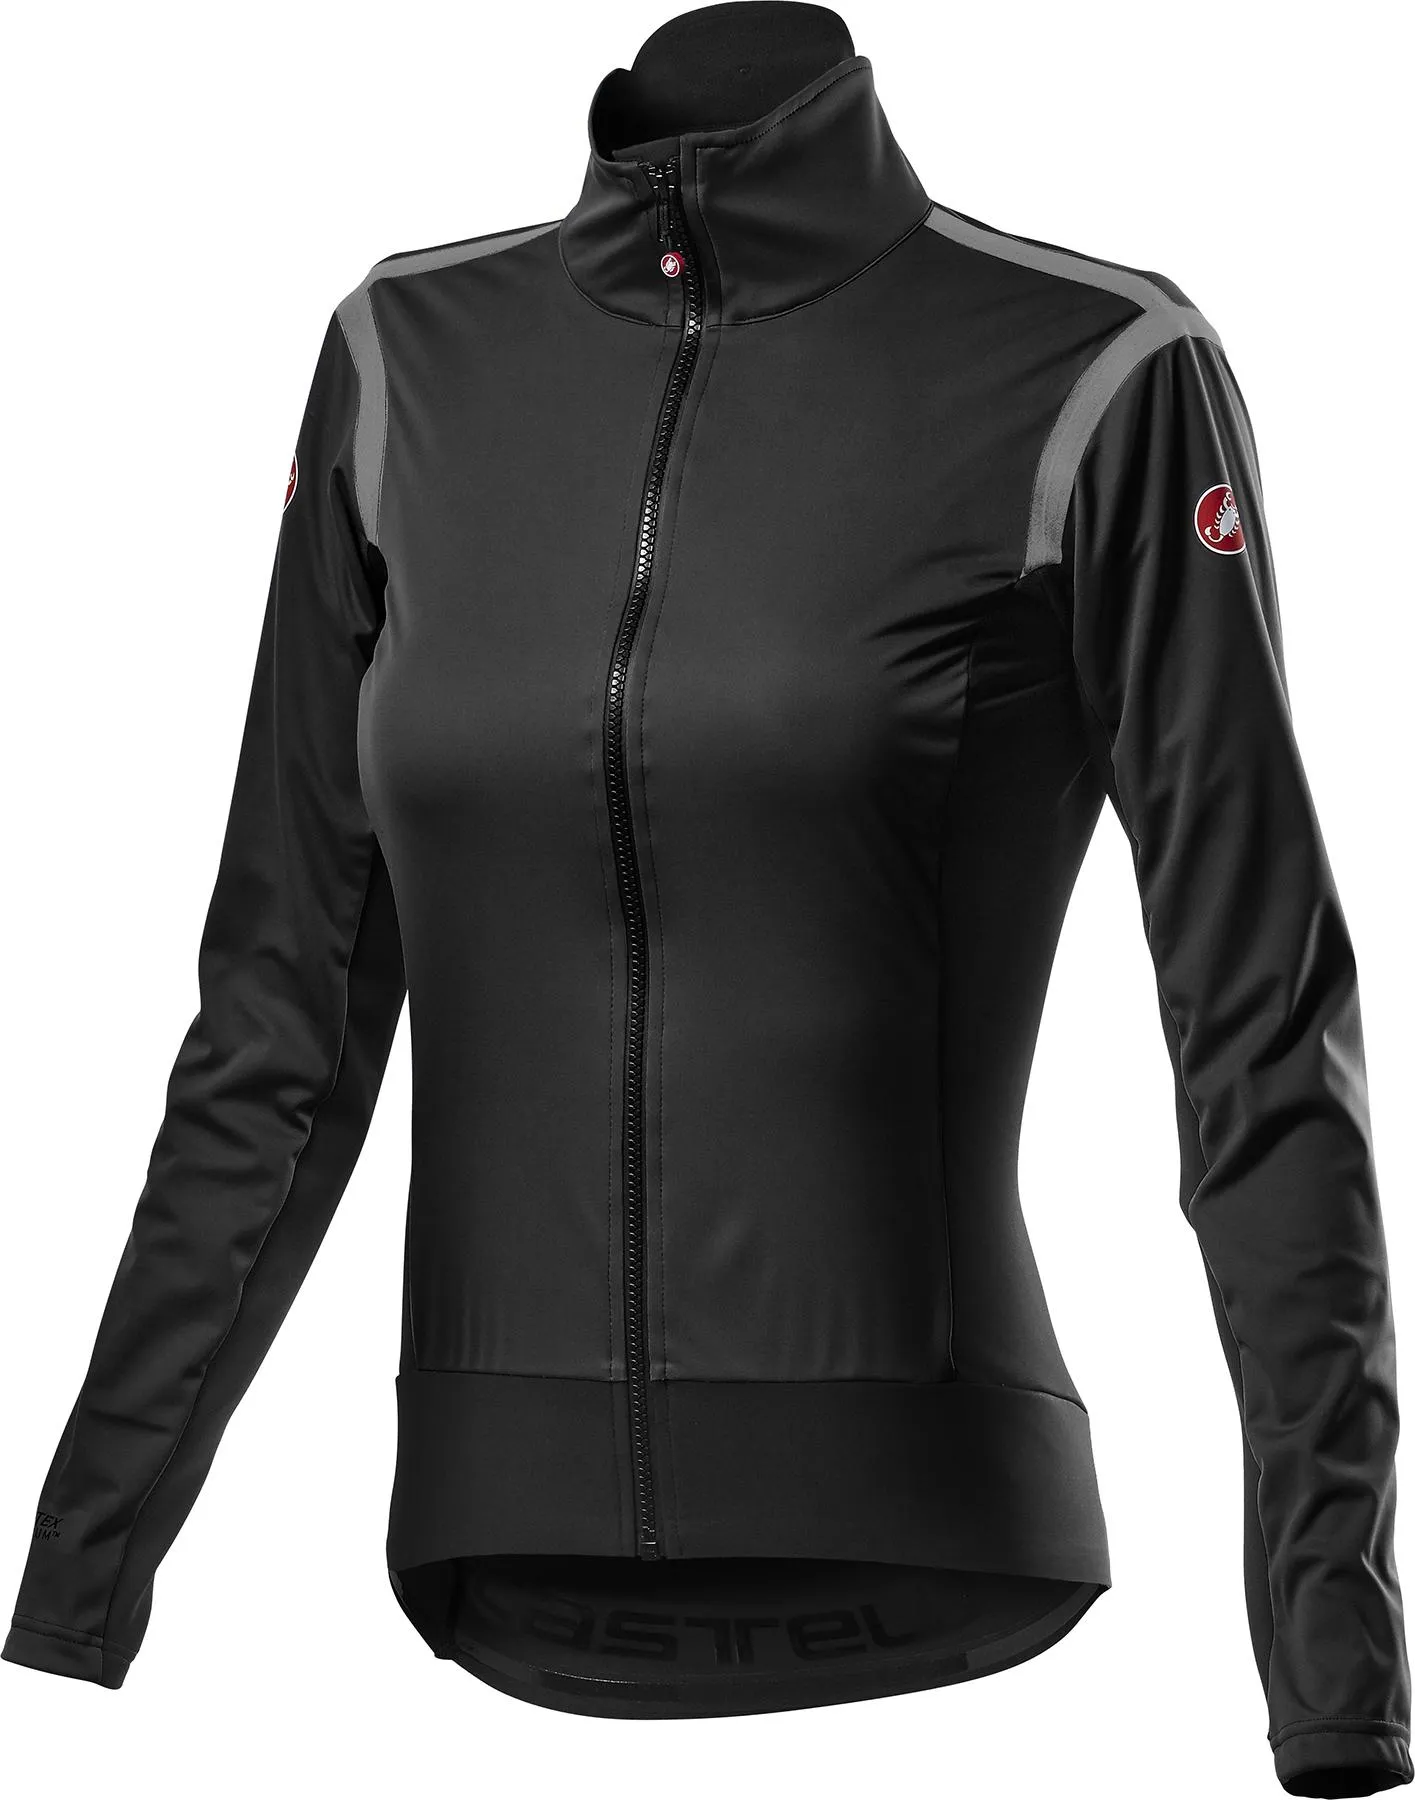  Women's Alpha ROS 2 Light Jacket, Light Black